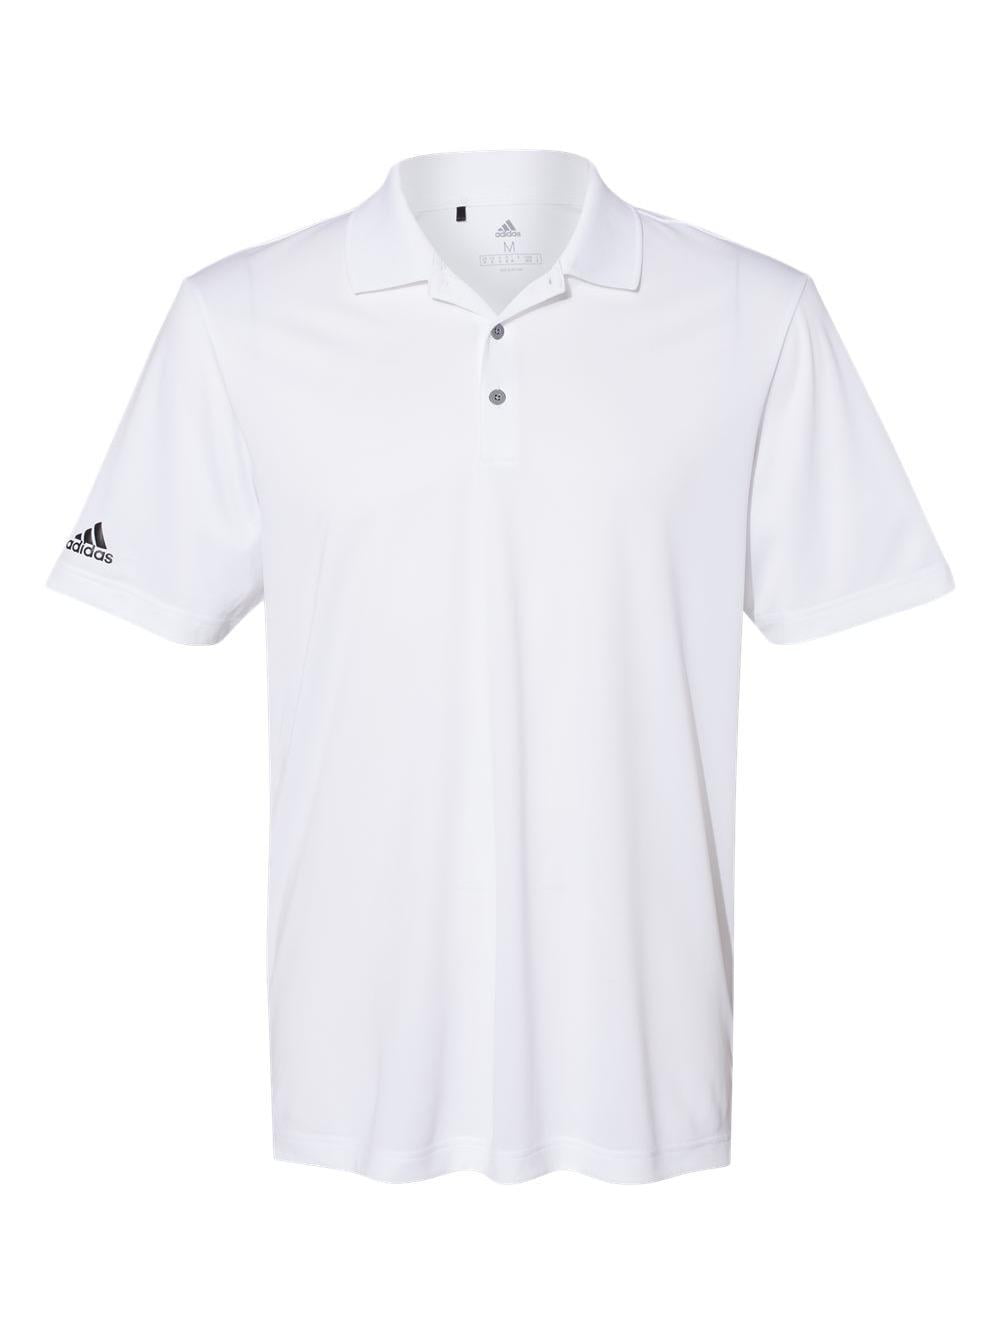 Adidas - Polo - A230 - White - Size: 3XL - Walmart.com